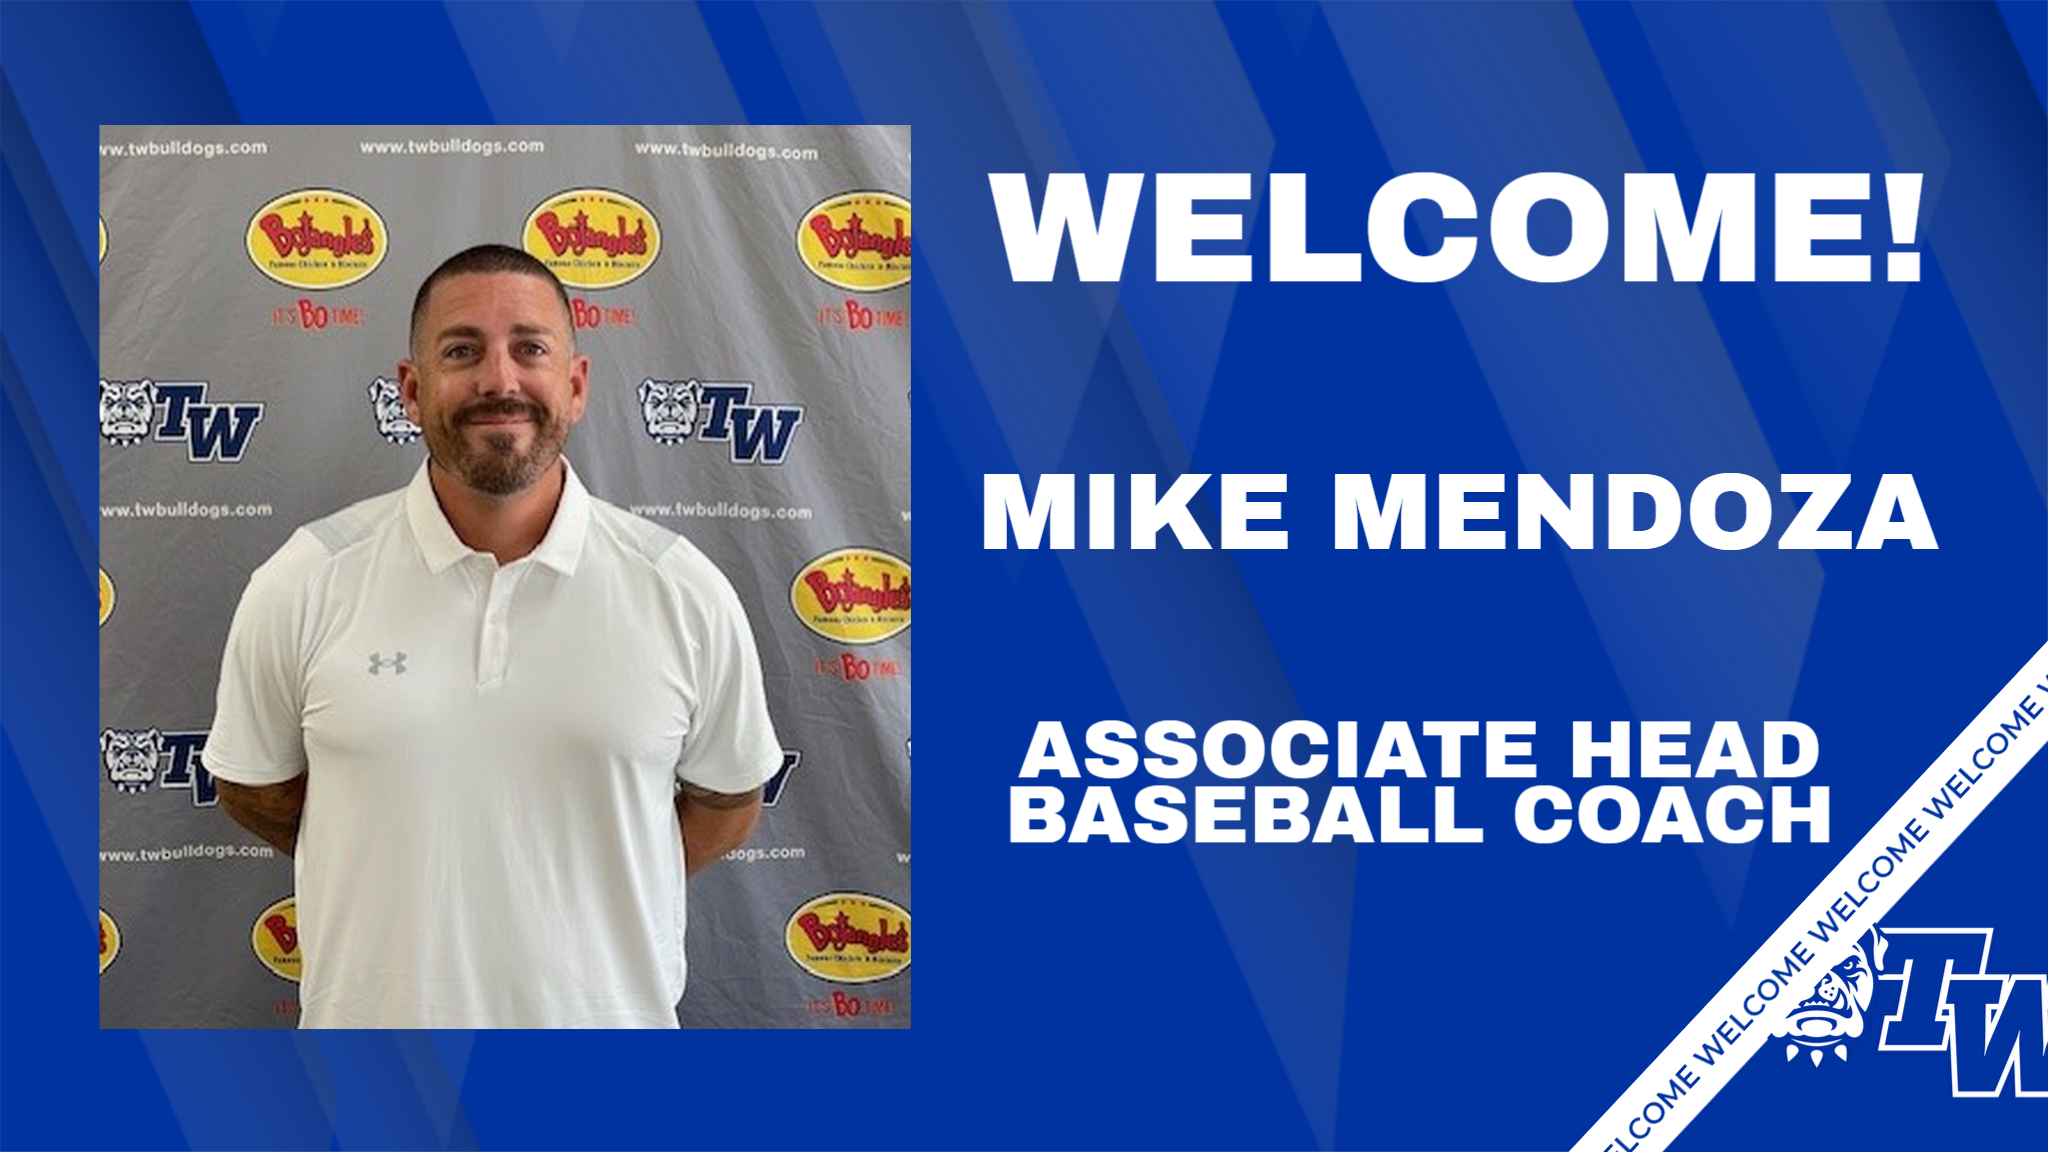 Mendoza Joins Baseball Staff as Associate Head Coach